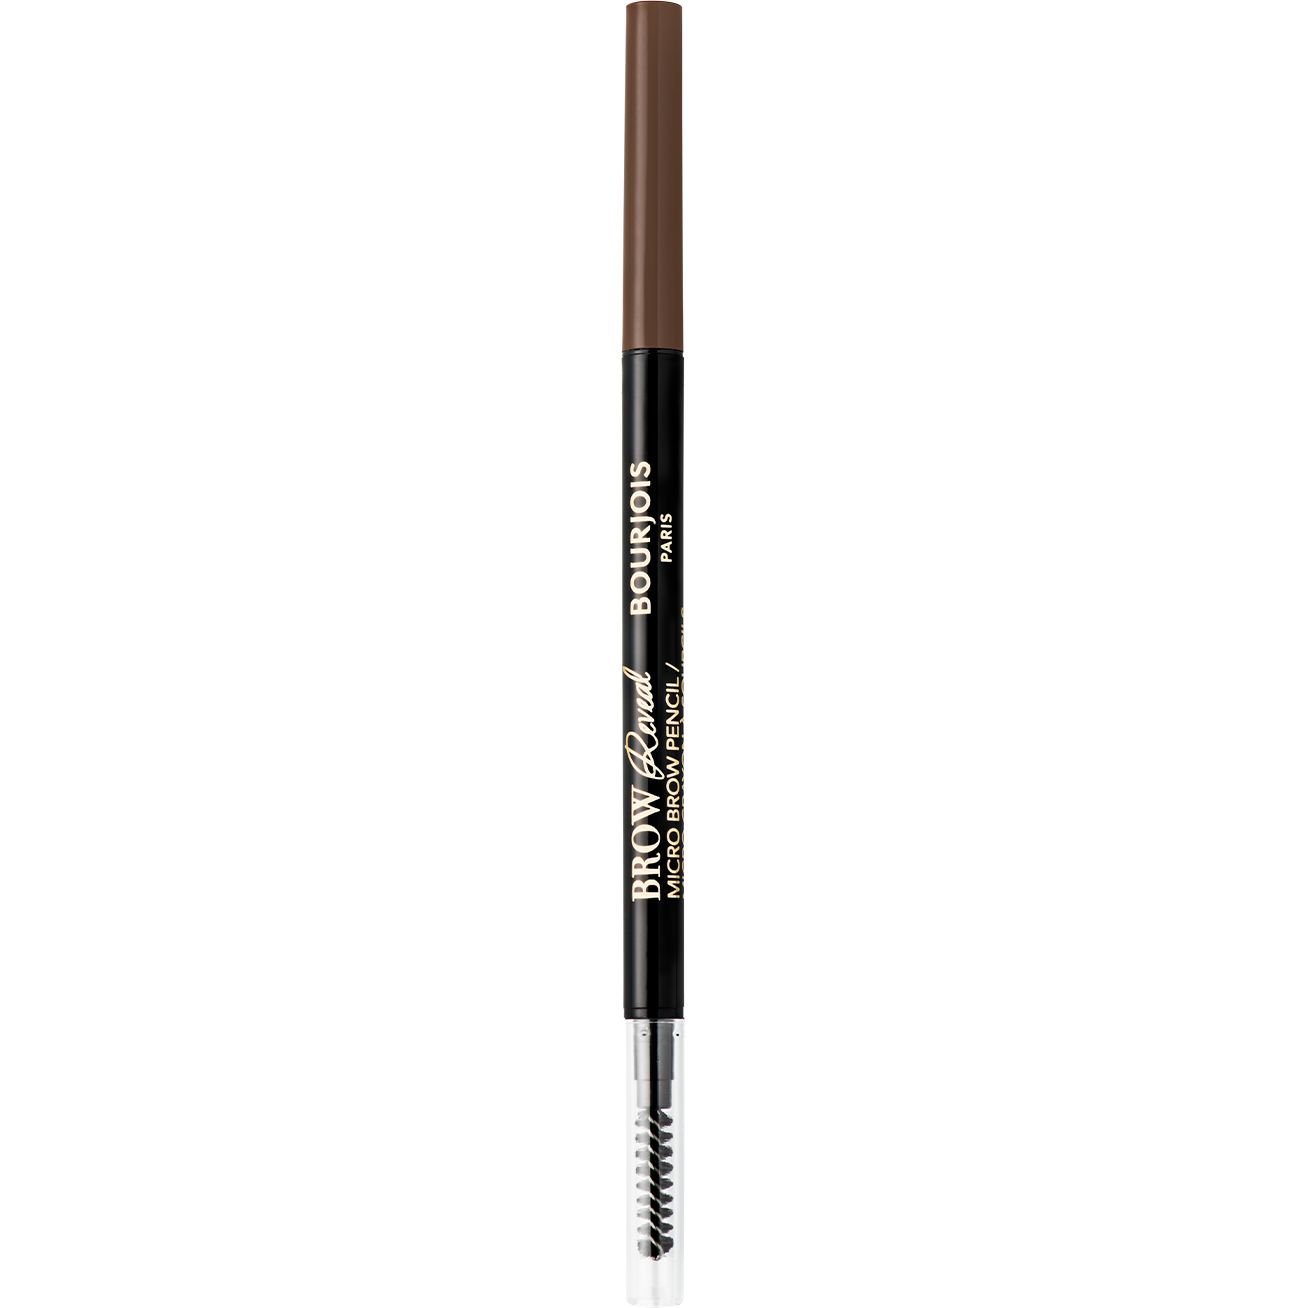 Олівець для брів Bourjois Brow Reveal Micro Brow Pencil Soft Brown тон 002 автоматичний 0.09 г - фото 1